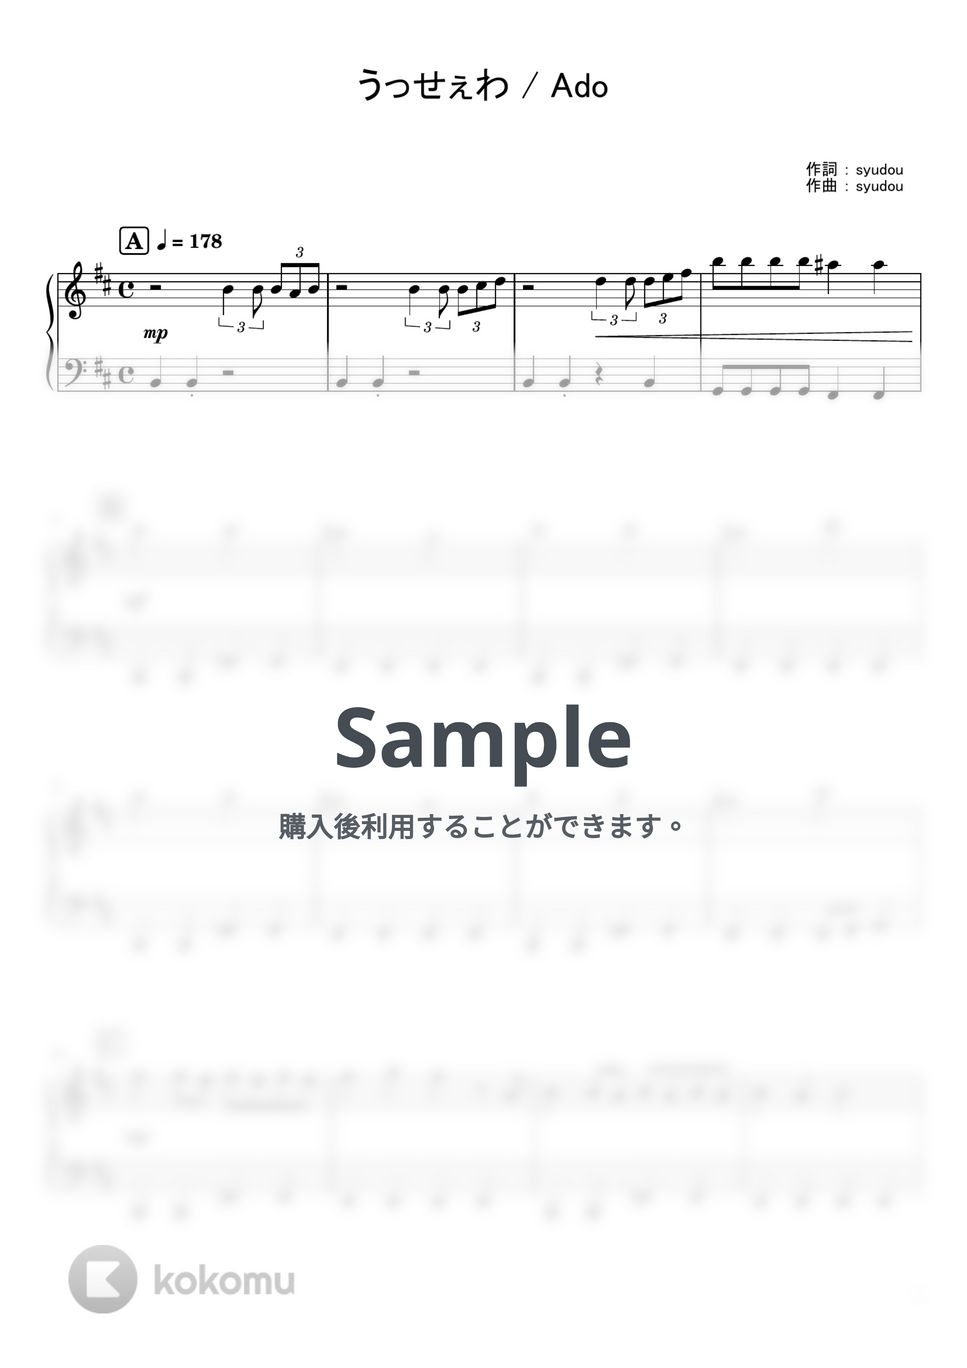 Ado - うっせぇわ (ピアノ 楽譜) by ITO